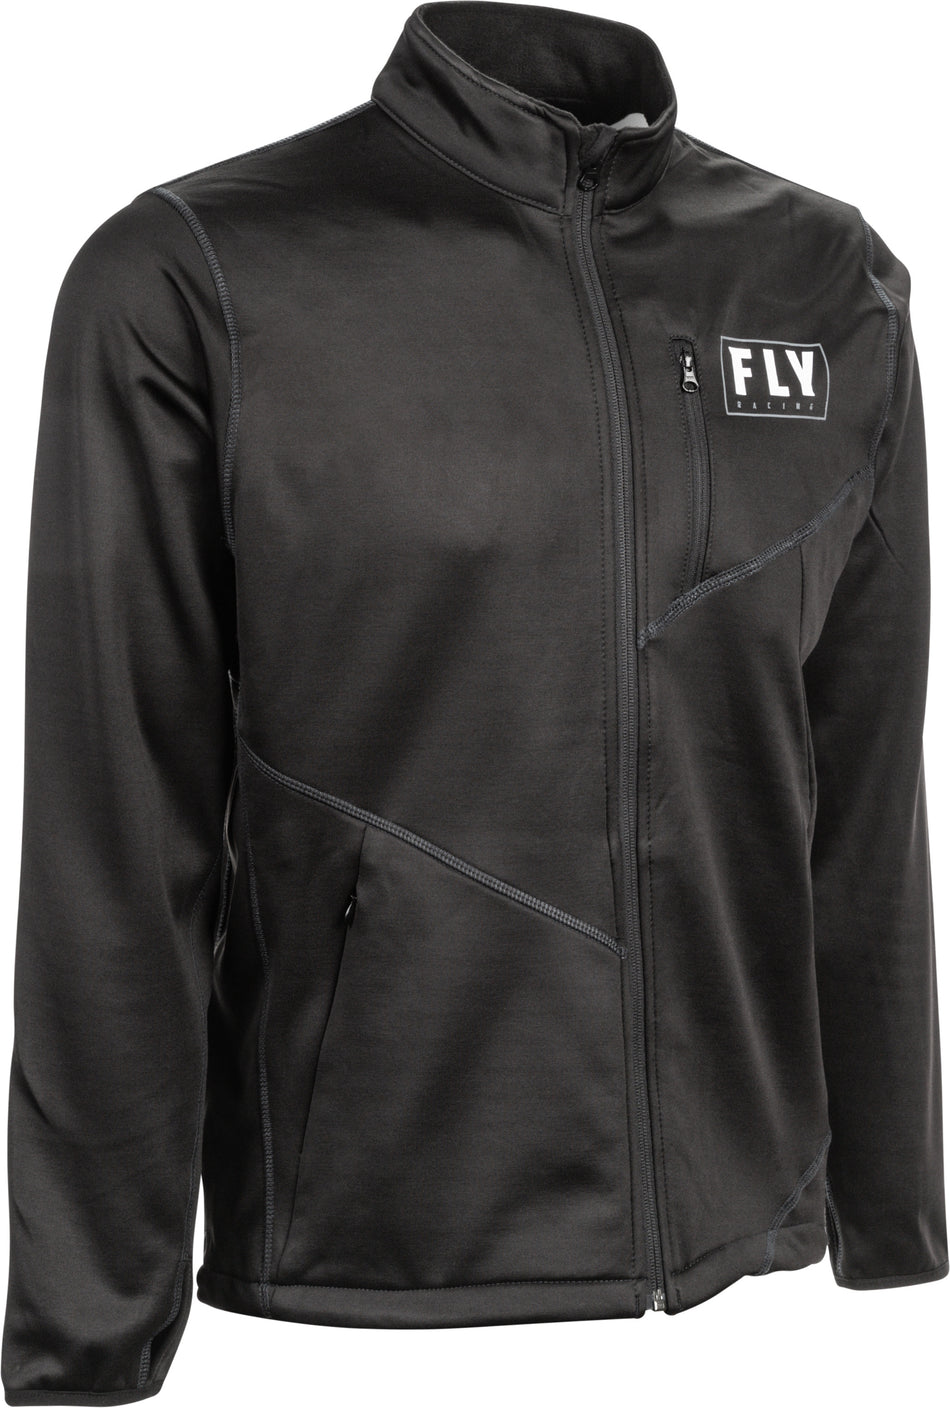 FLY RACING Mid-Layer Jacket Black 3x 354-63203X